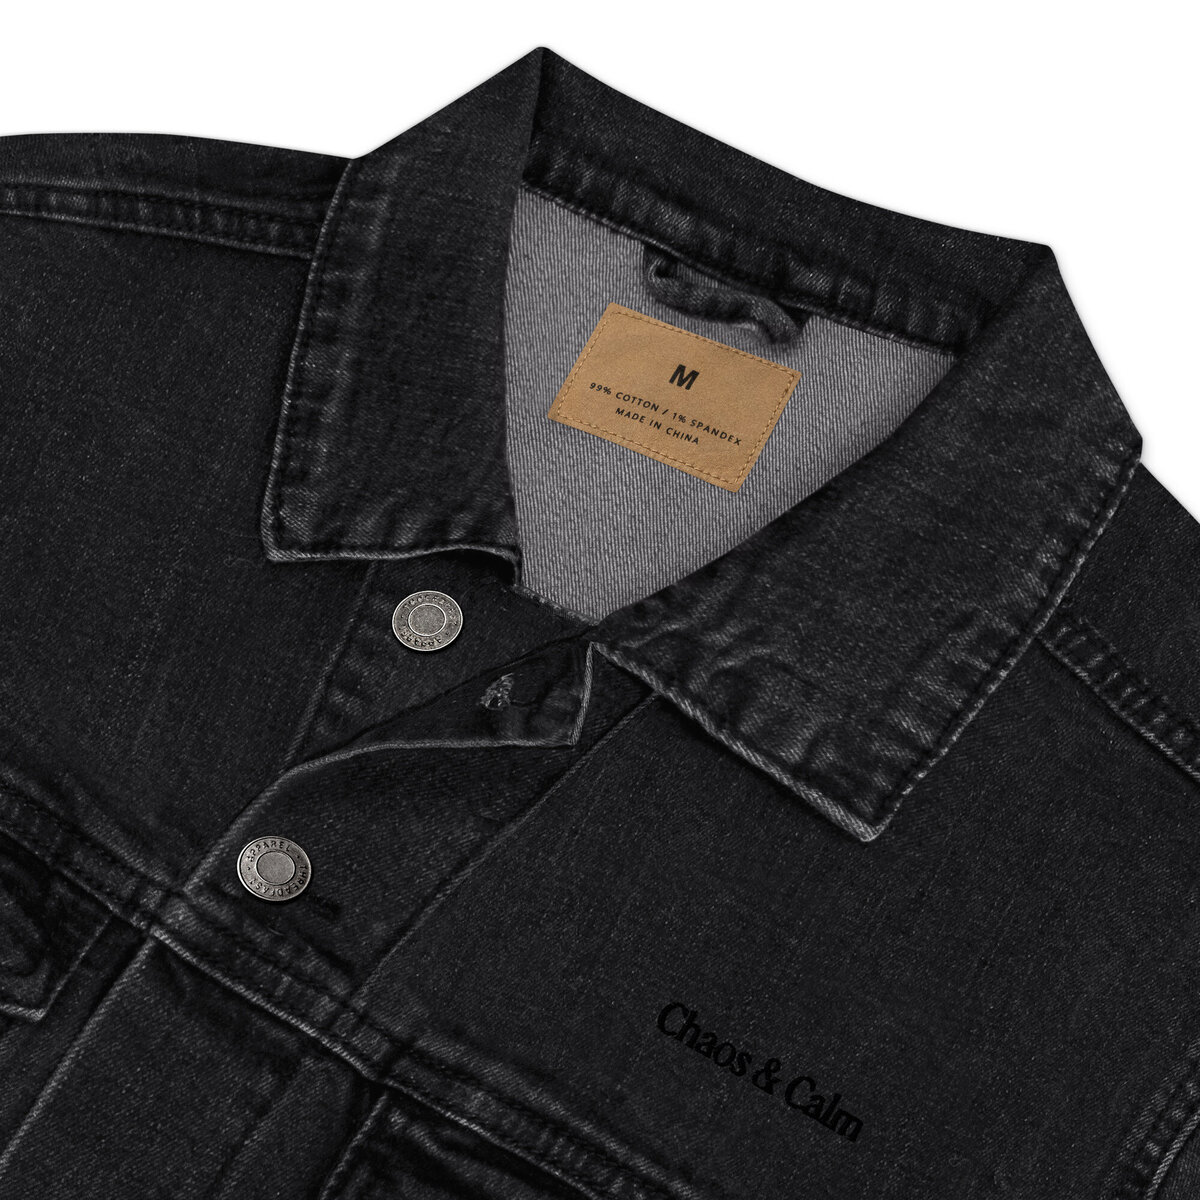 Details of the Vintage Inspired Breathe Denim Jacket I Merch Shoppe I Chaos & Calm